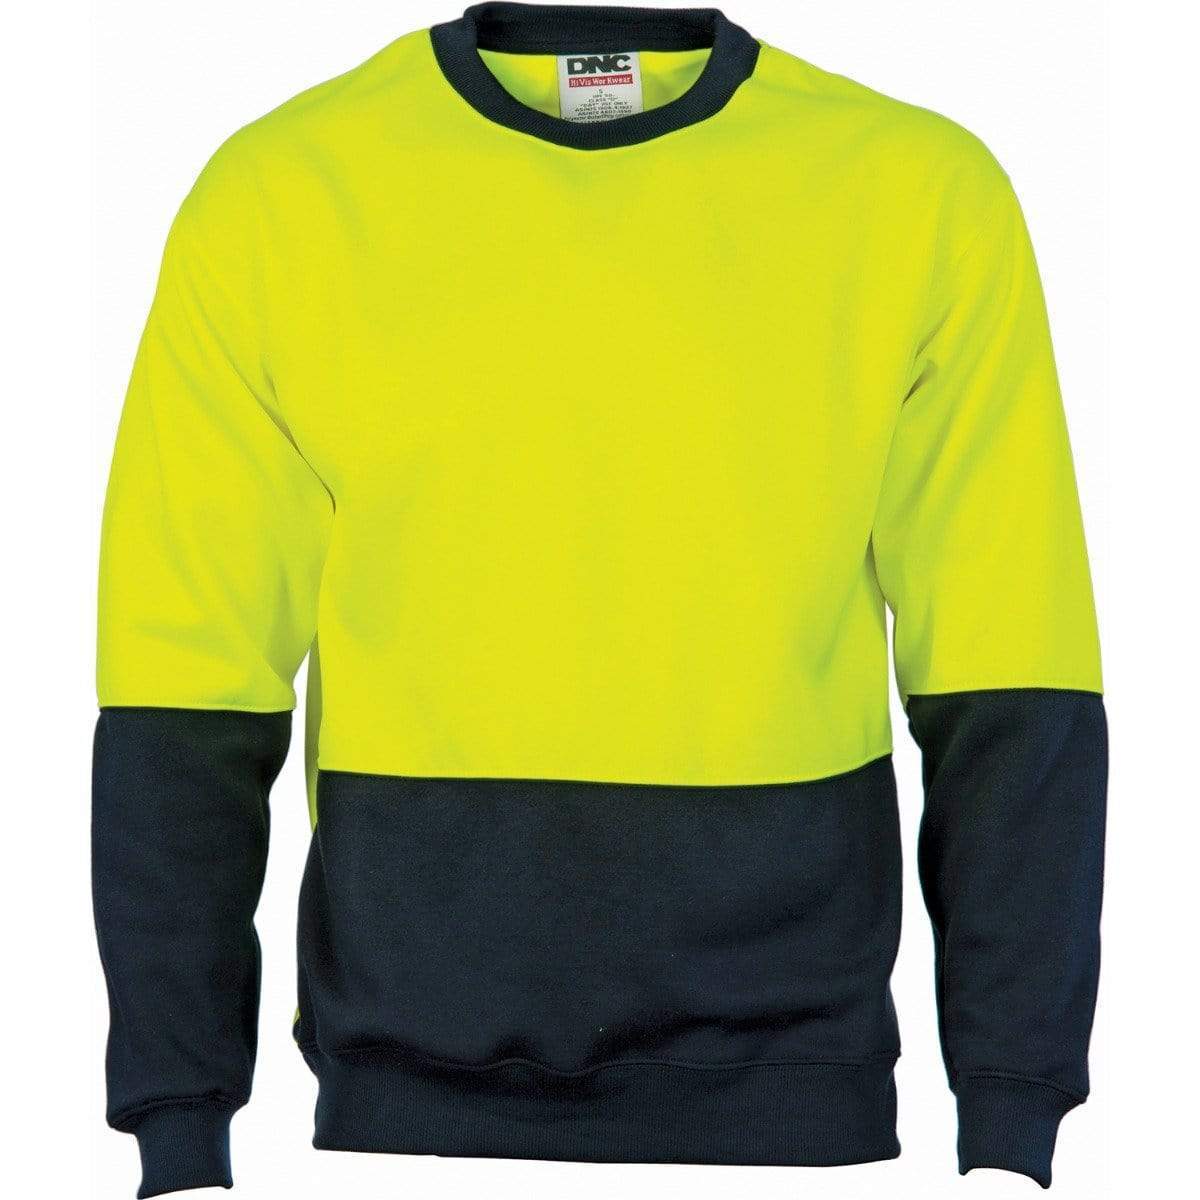 Dnc Workwear Hi-vis Two-tone Fleecy Crew-neck Sweatshirt (Sloppy Joe) - 3821 Work Wear DNC Workwear Yellow/Navy XS 